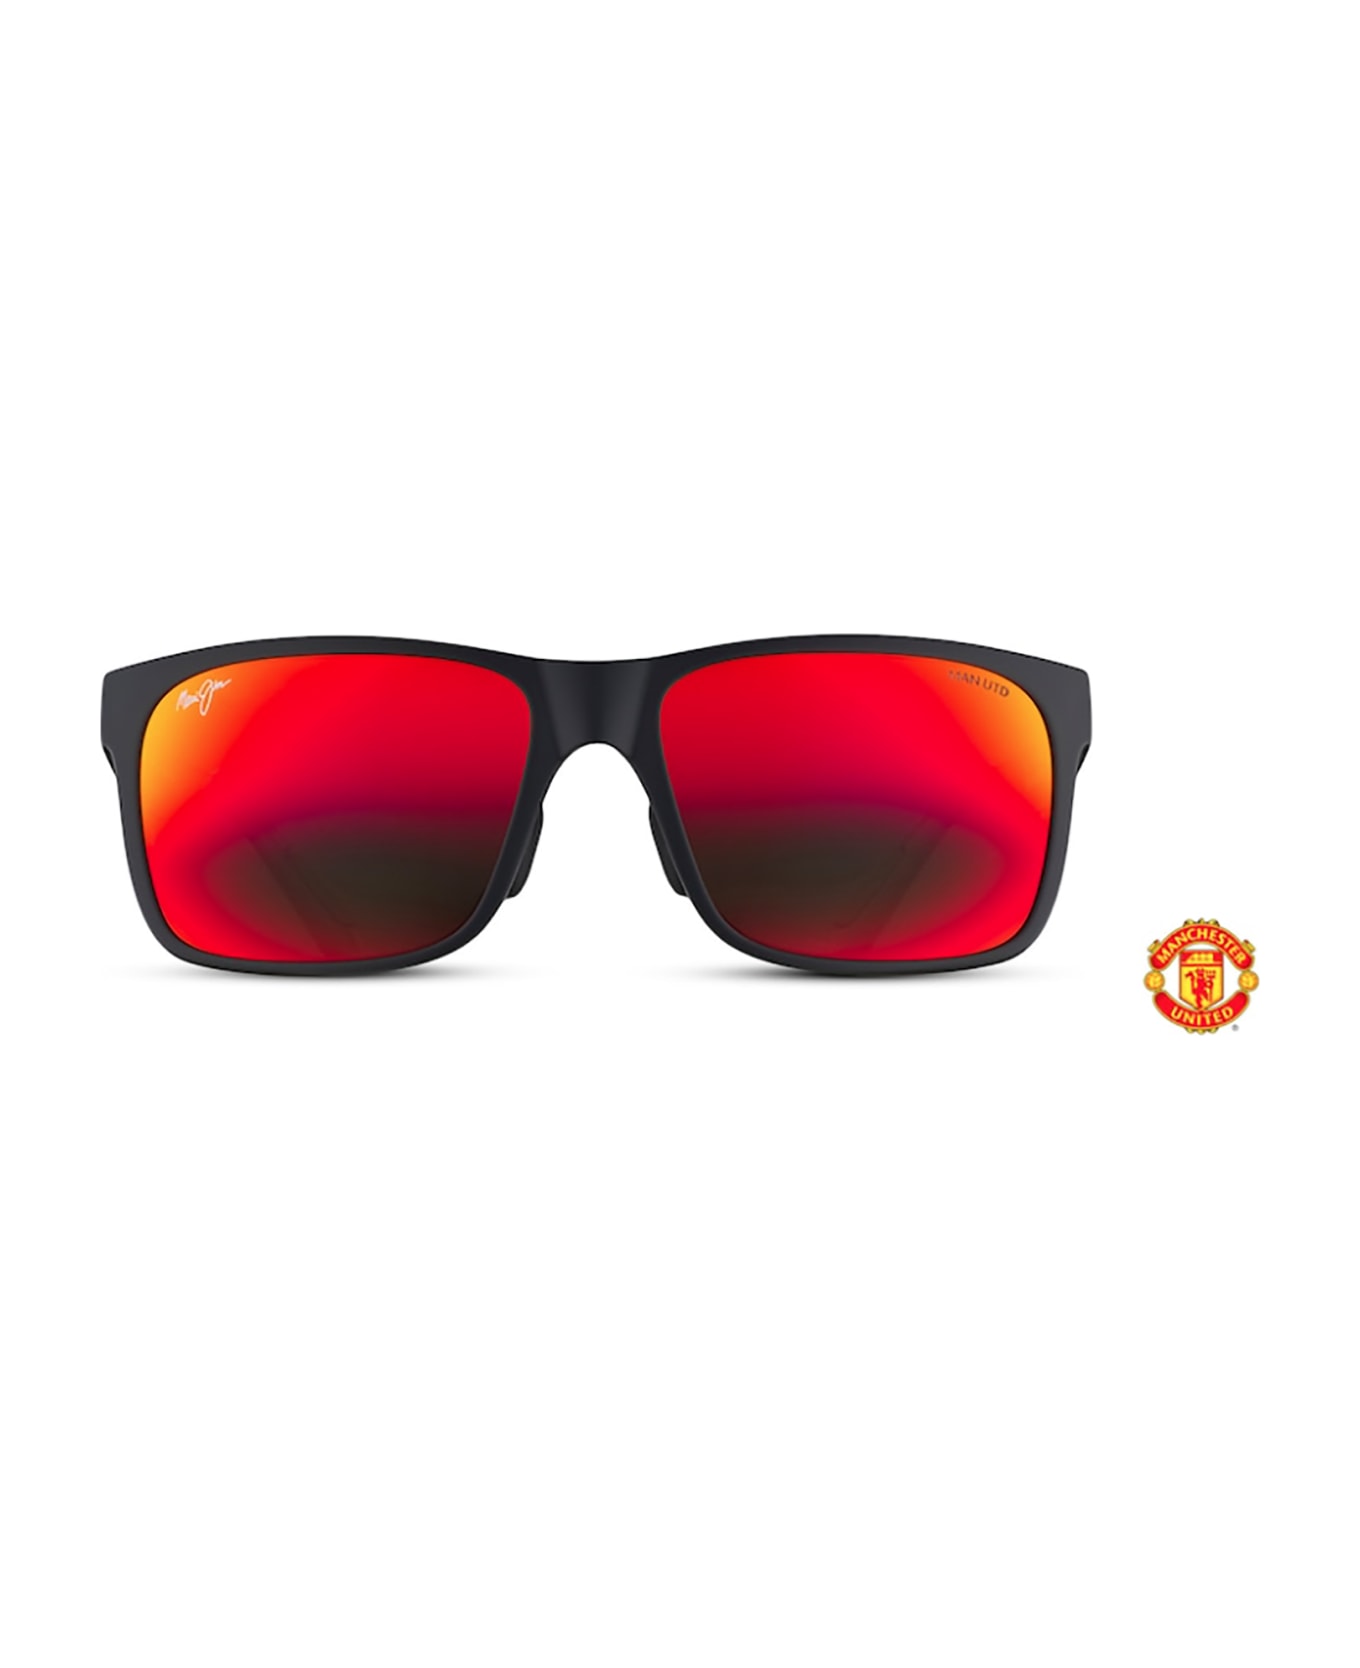 Maui Jim RED SANDS ASIAN FIT Sunglasses - Hi Lava Red Sands Blk Mt